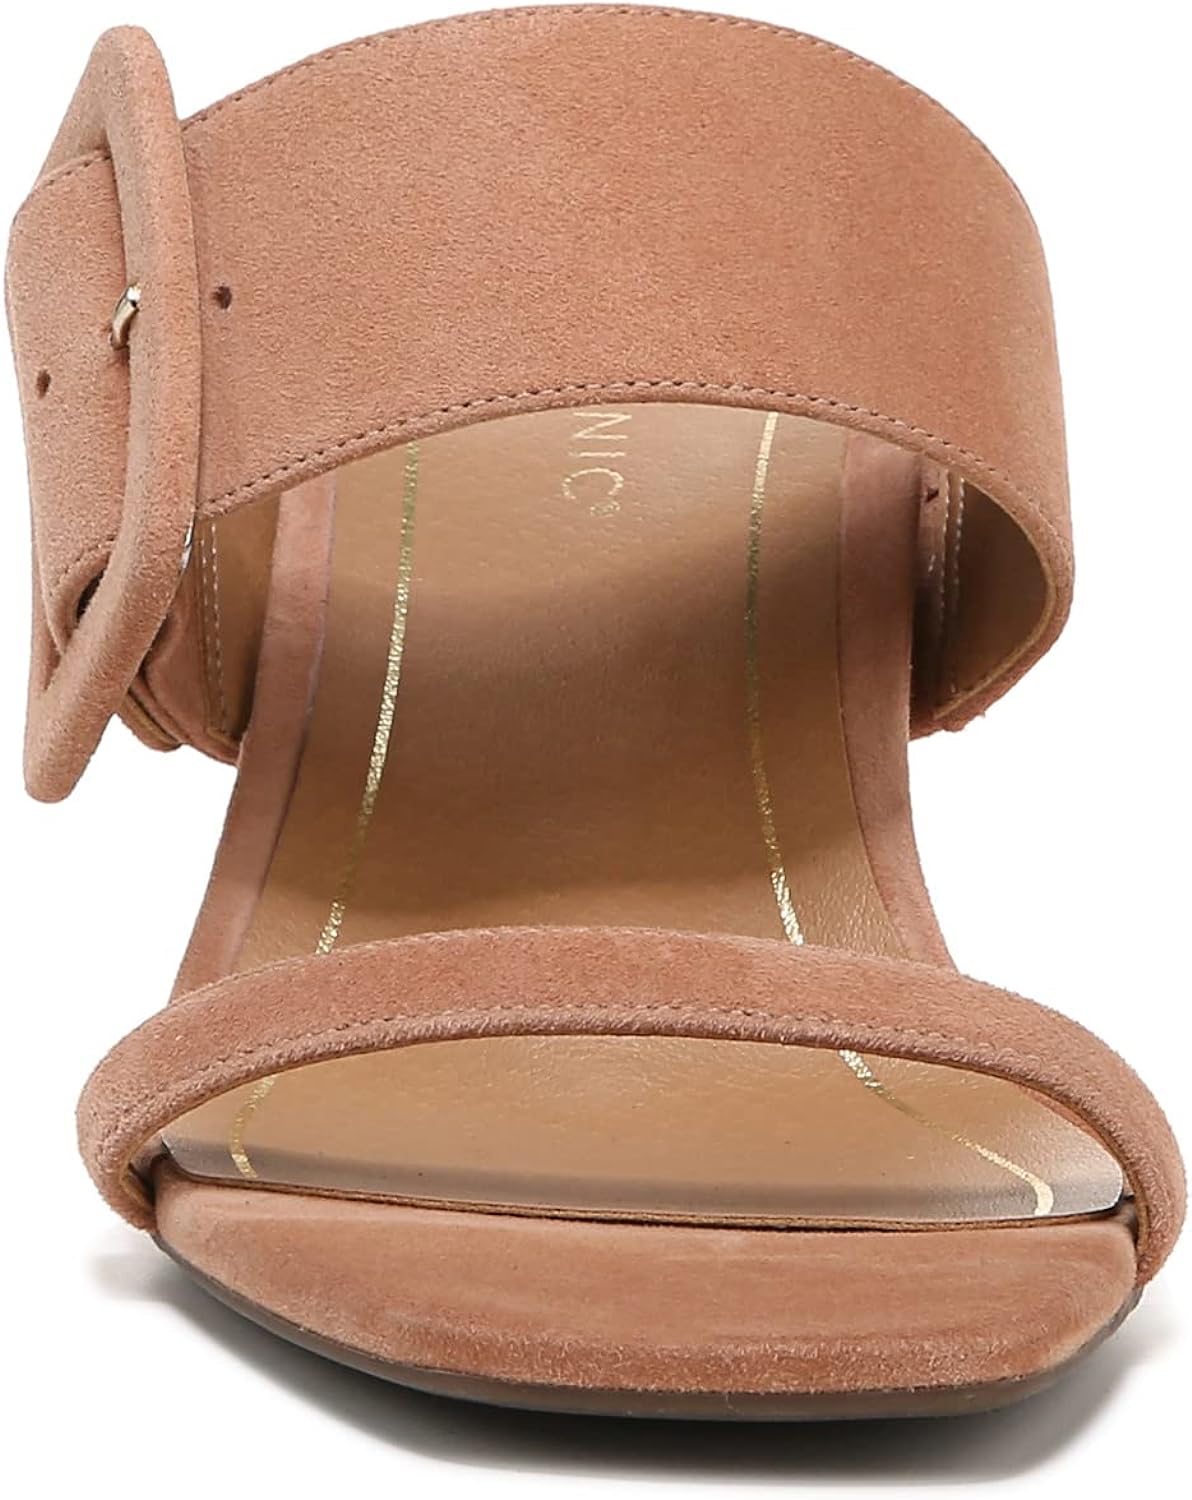 Vionic Women's Garnet Brookell Leather Heel Sandal